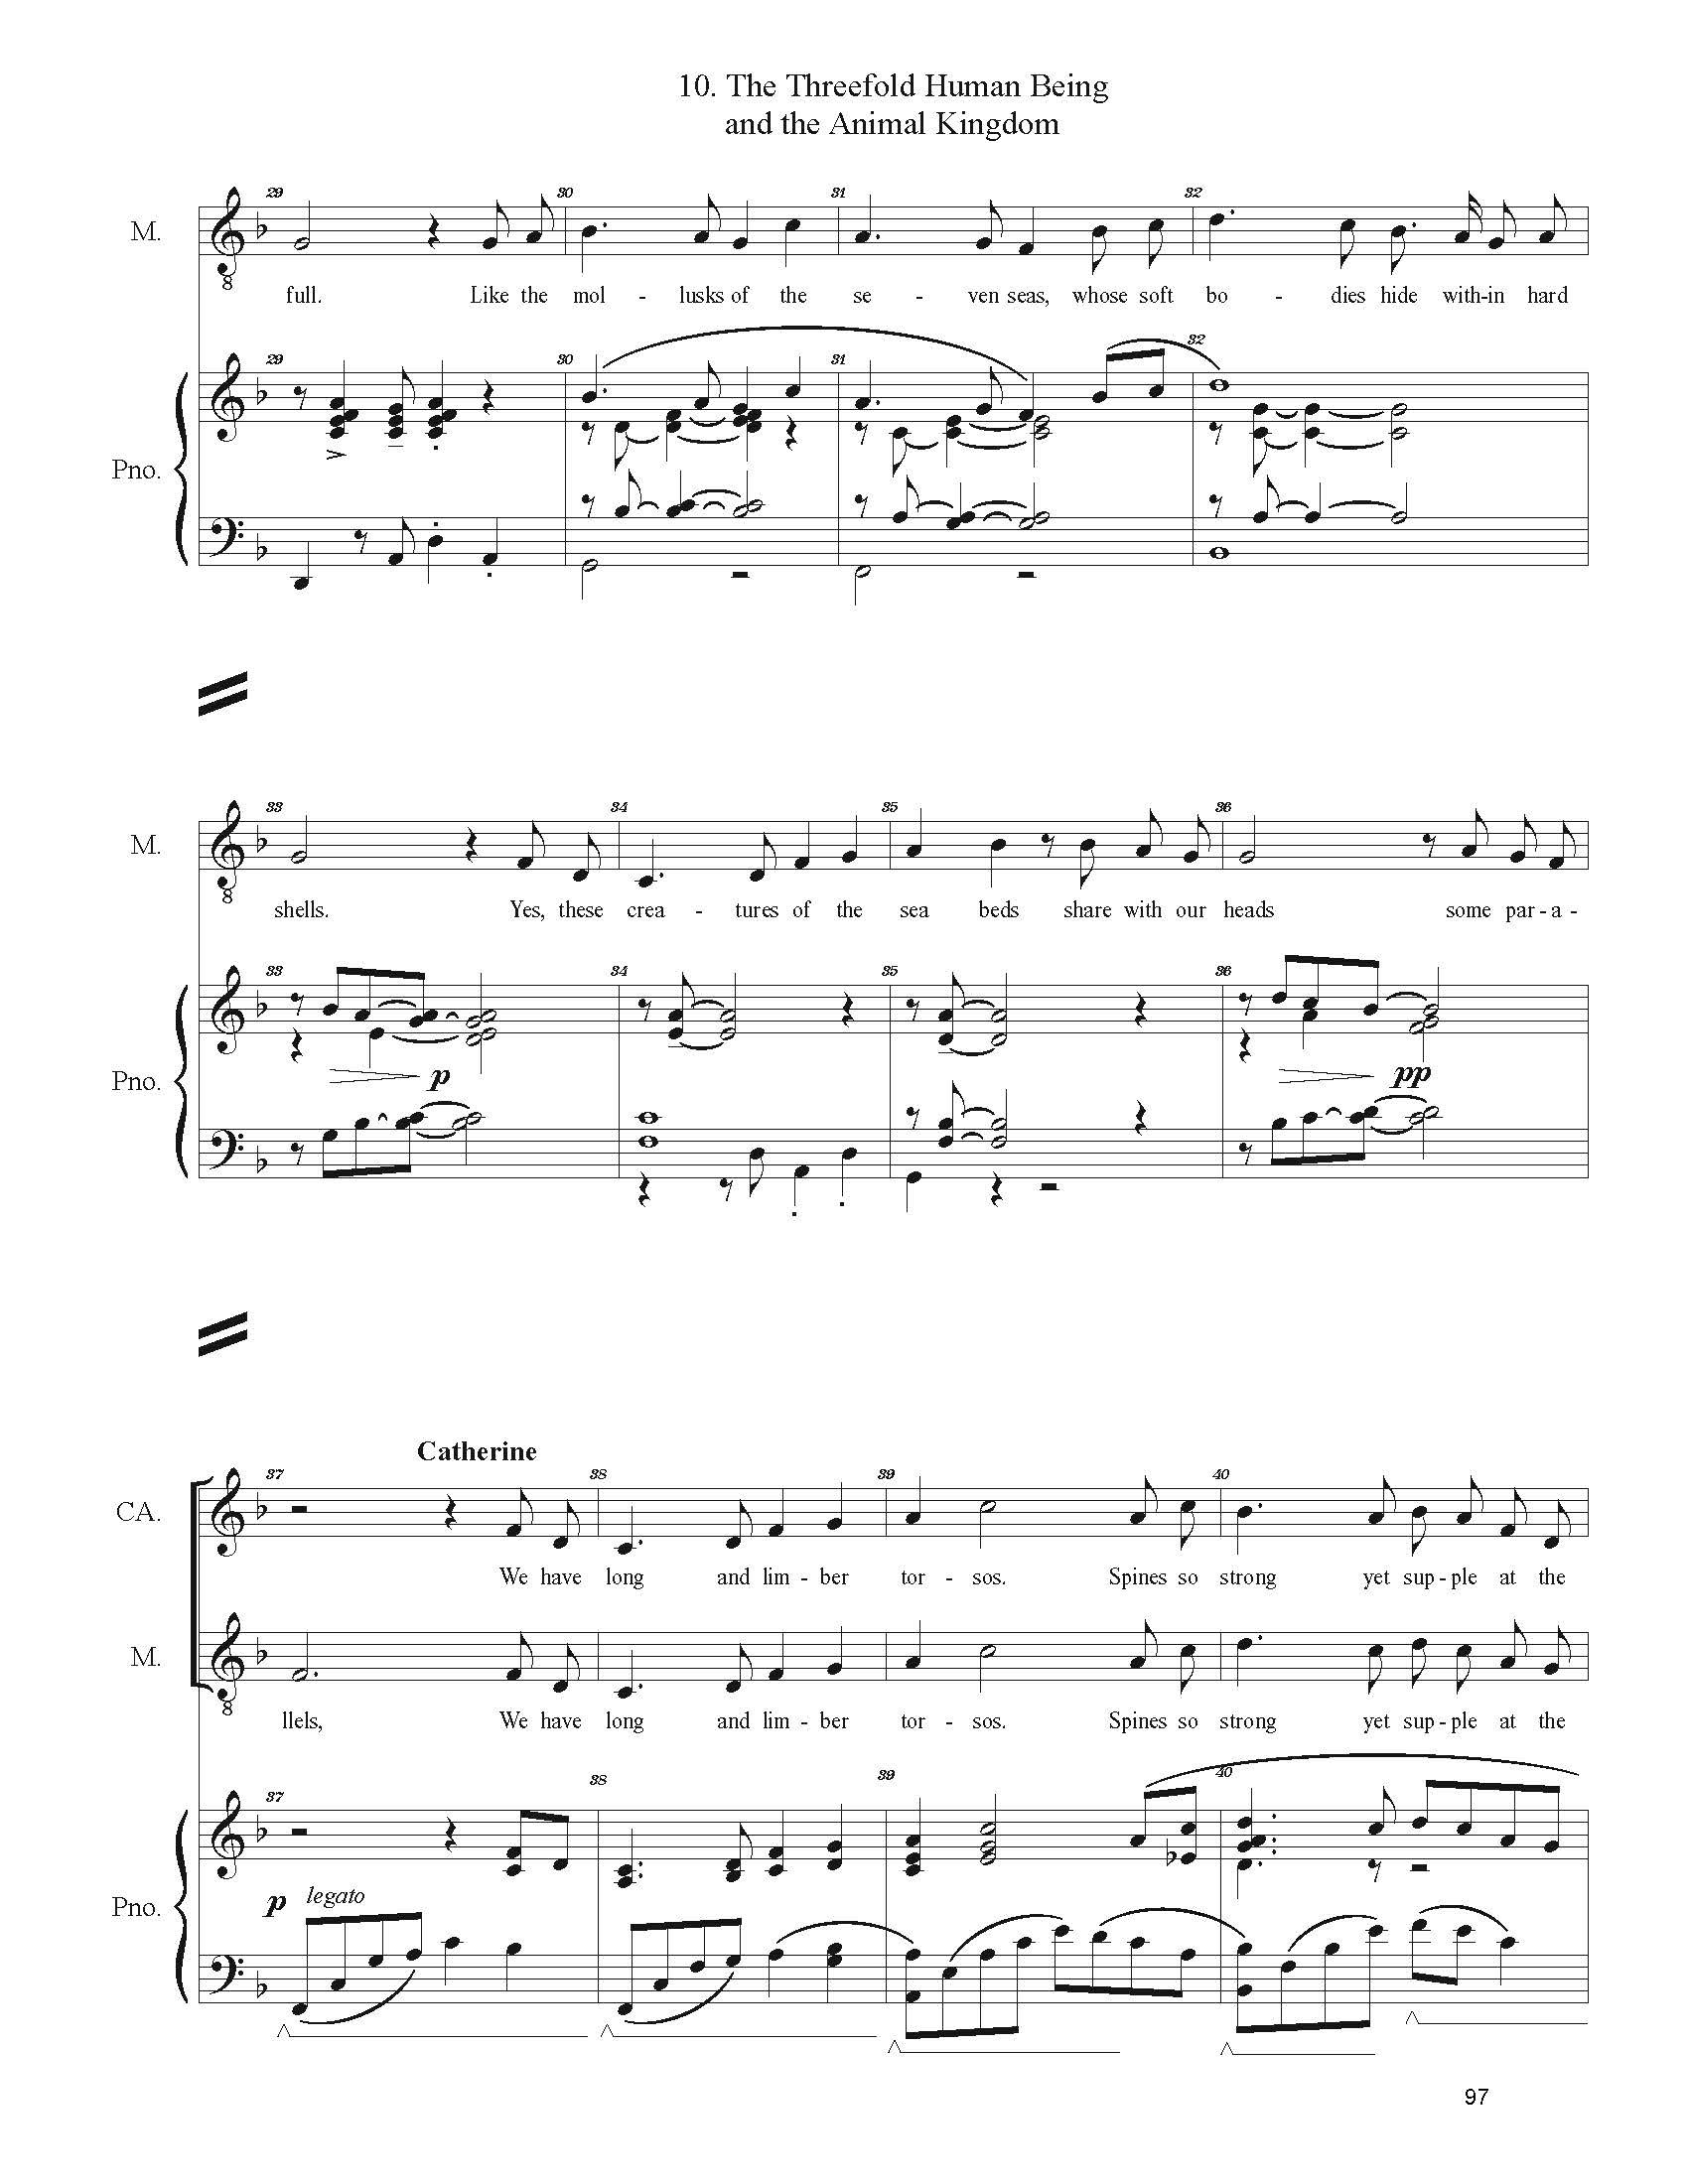 FULL PIANO VOCAL SCORE DRAFT 1 - Score_Page_097.jpg